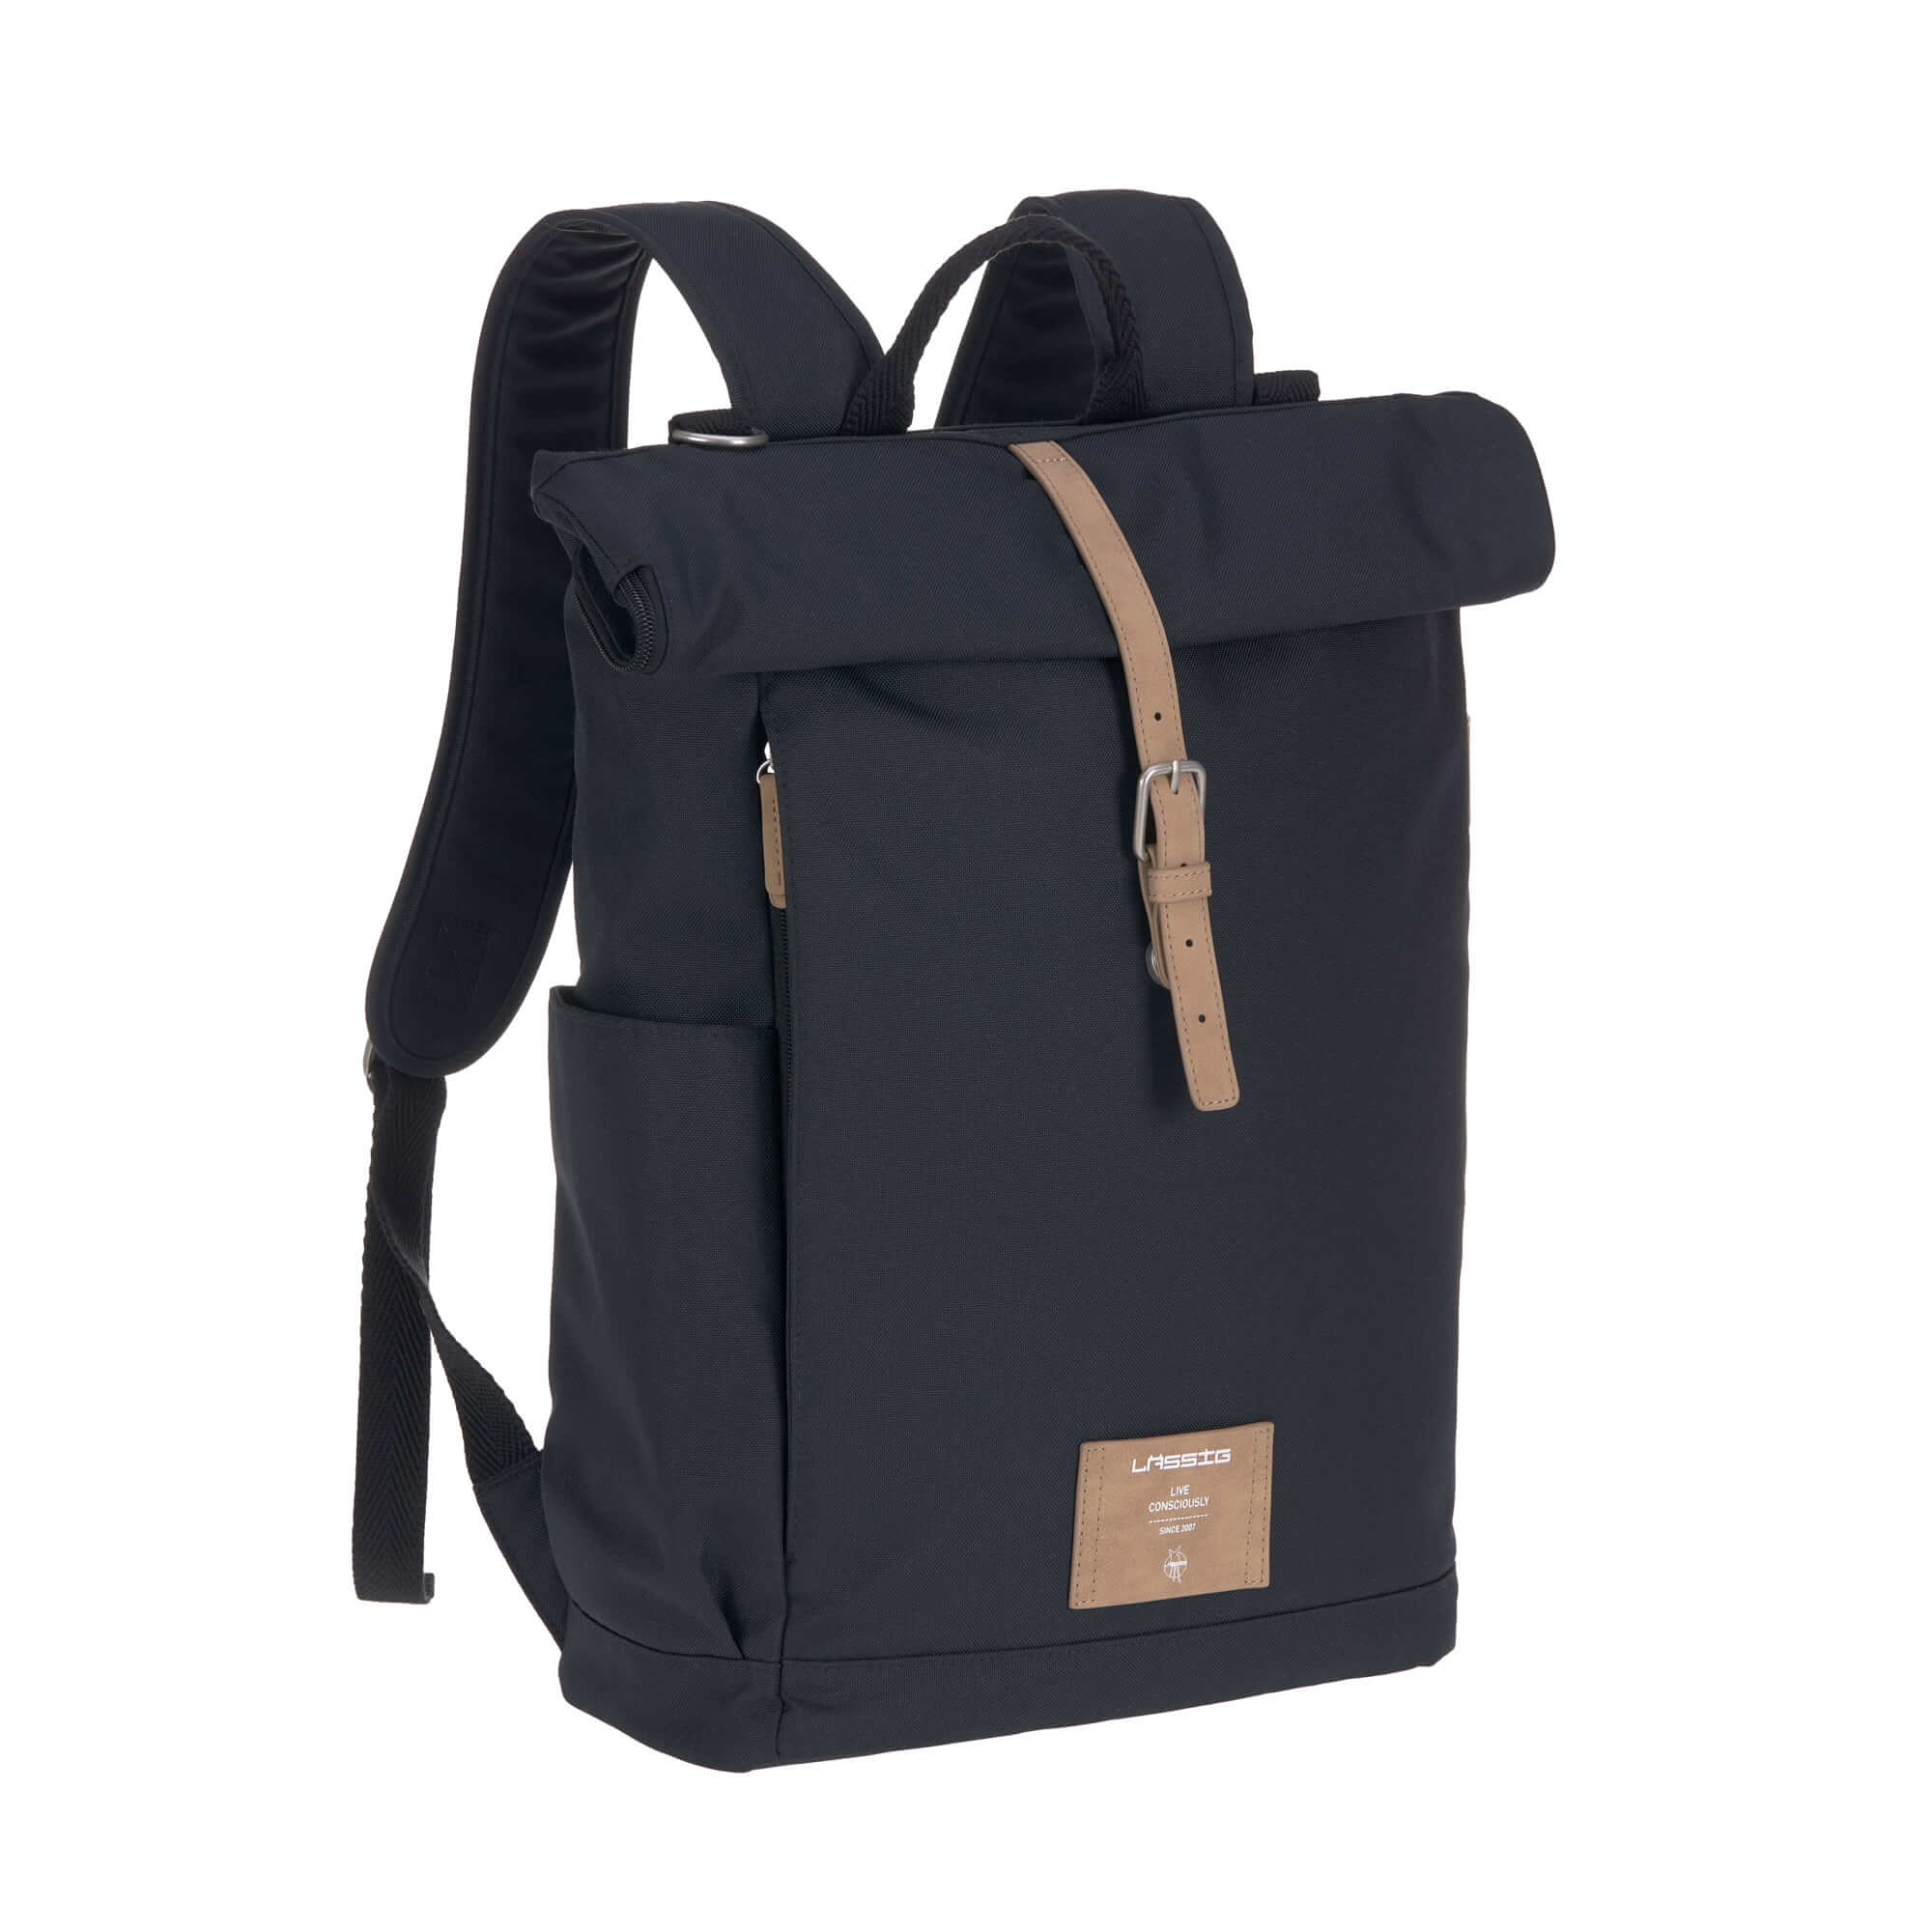 LÄSSIG Rolltop Backpack Diaper Bag